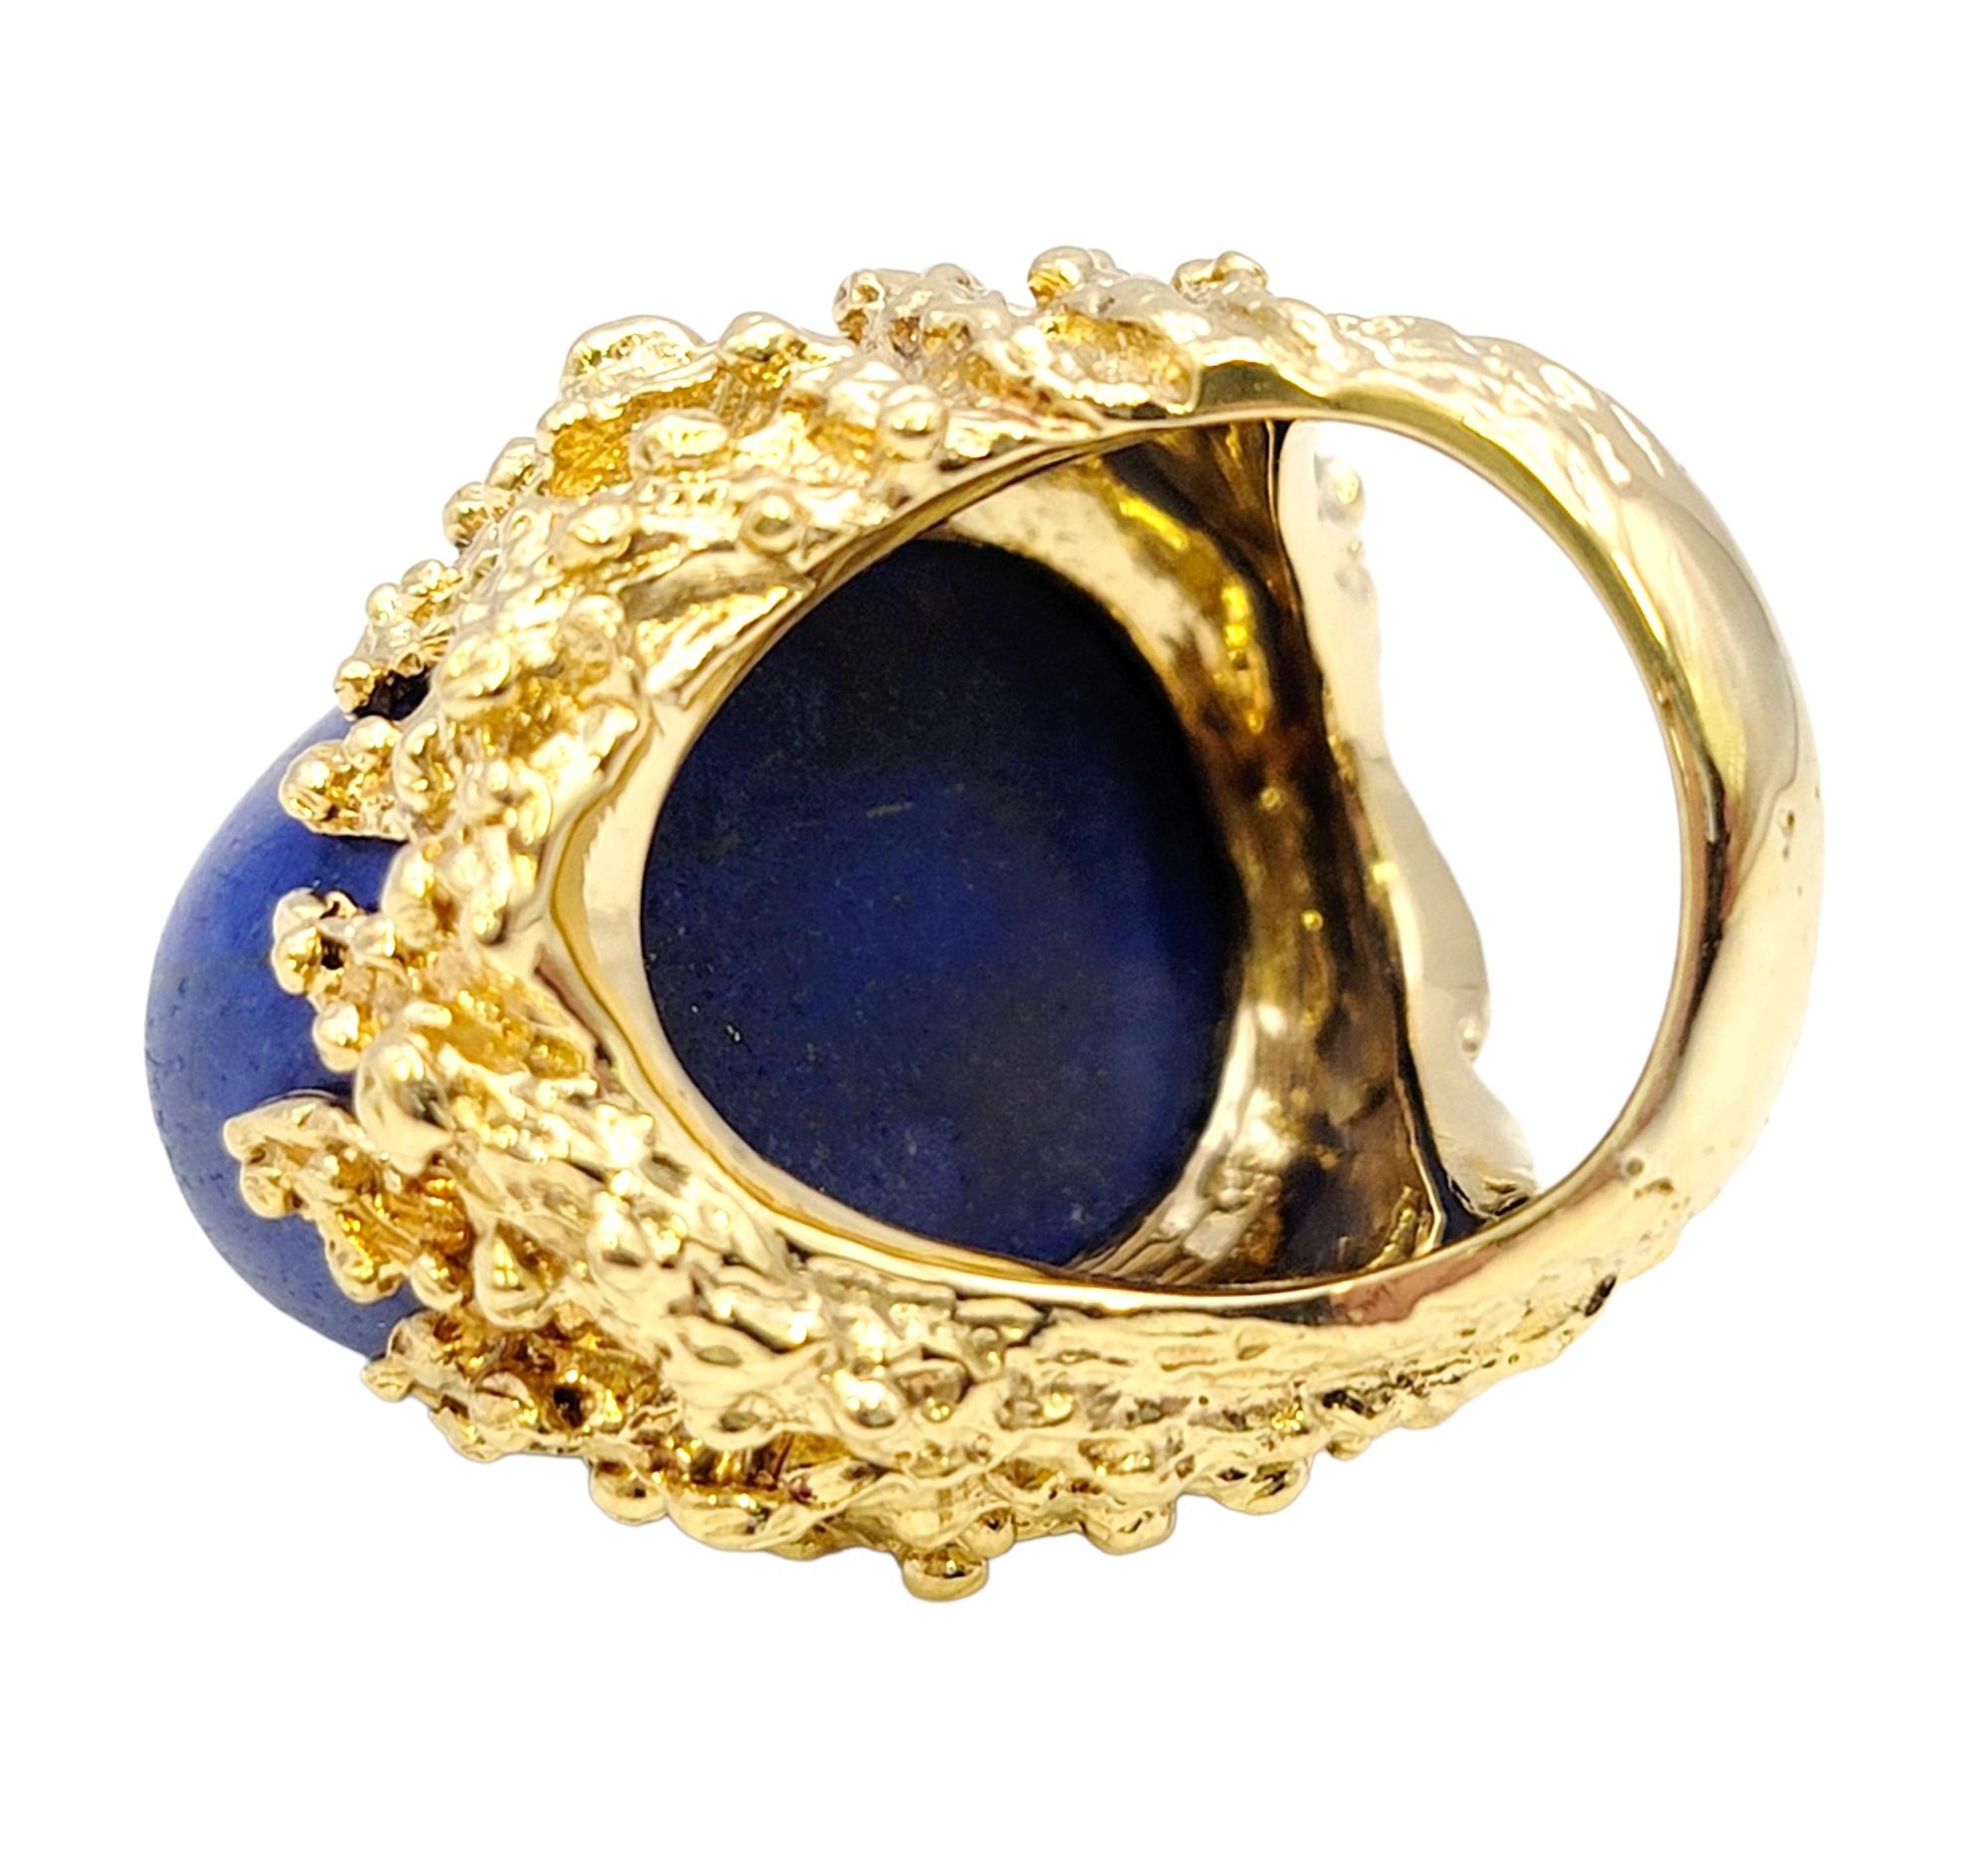 48.90 Carat Oval Cabochon Lapis Lazuli Coral Motif 18 Karat Gold Cocktail Ring 4